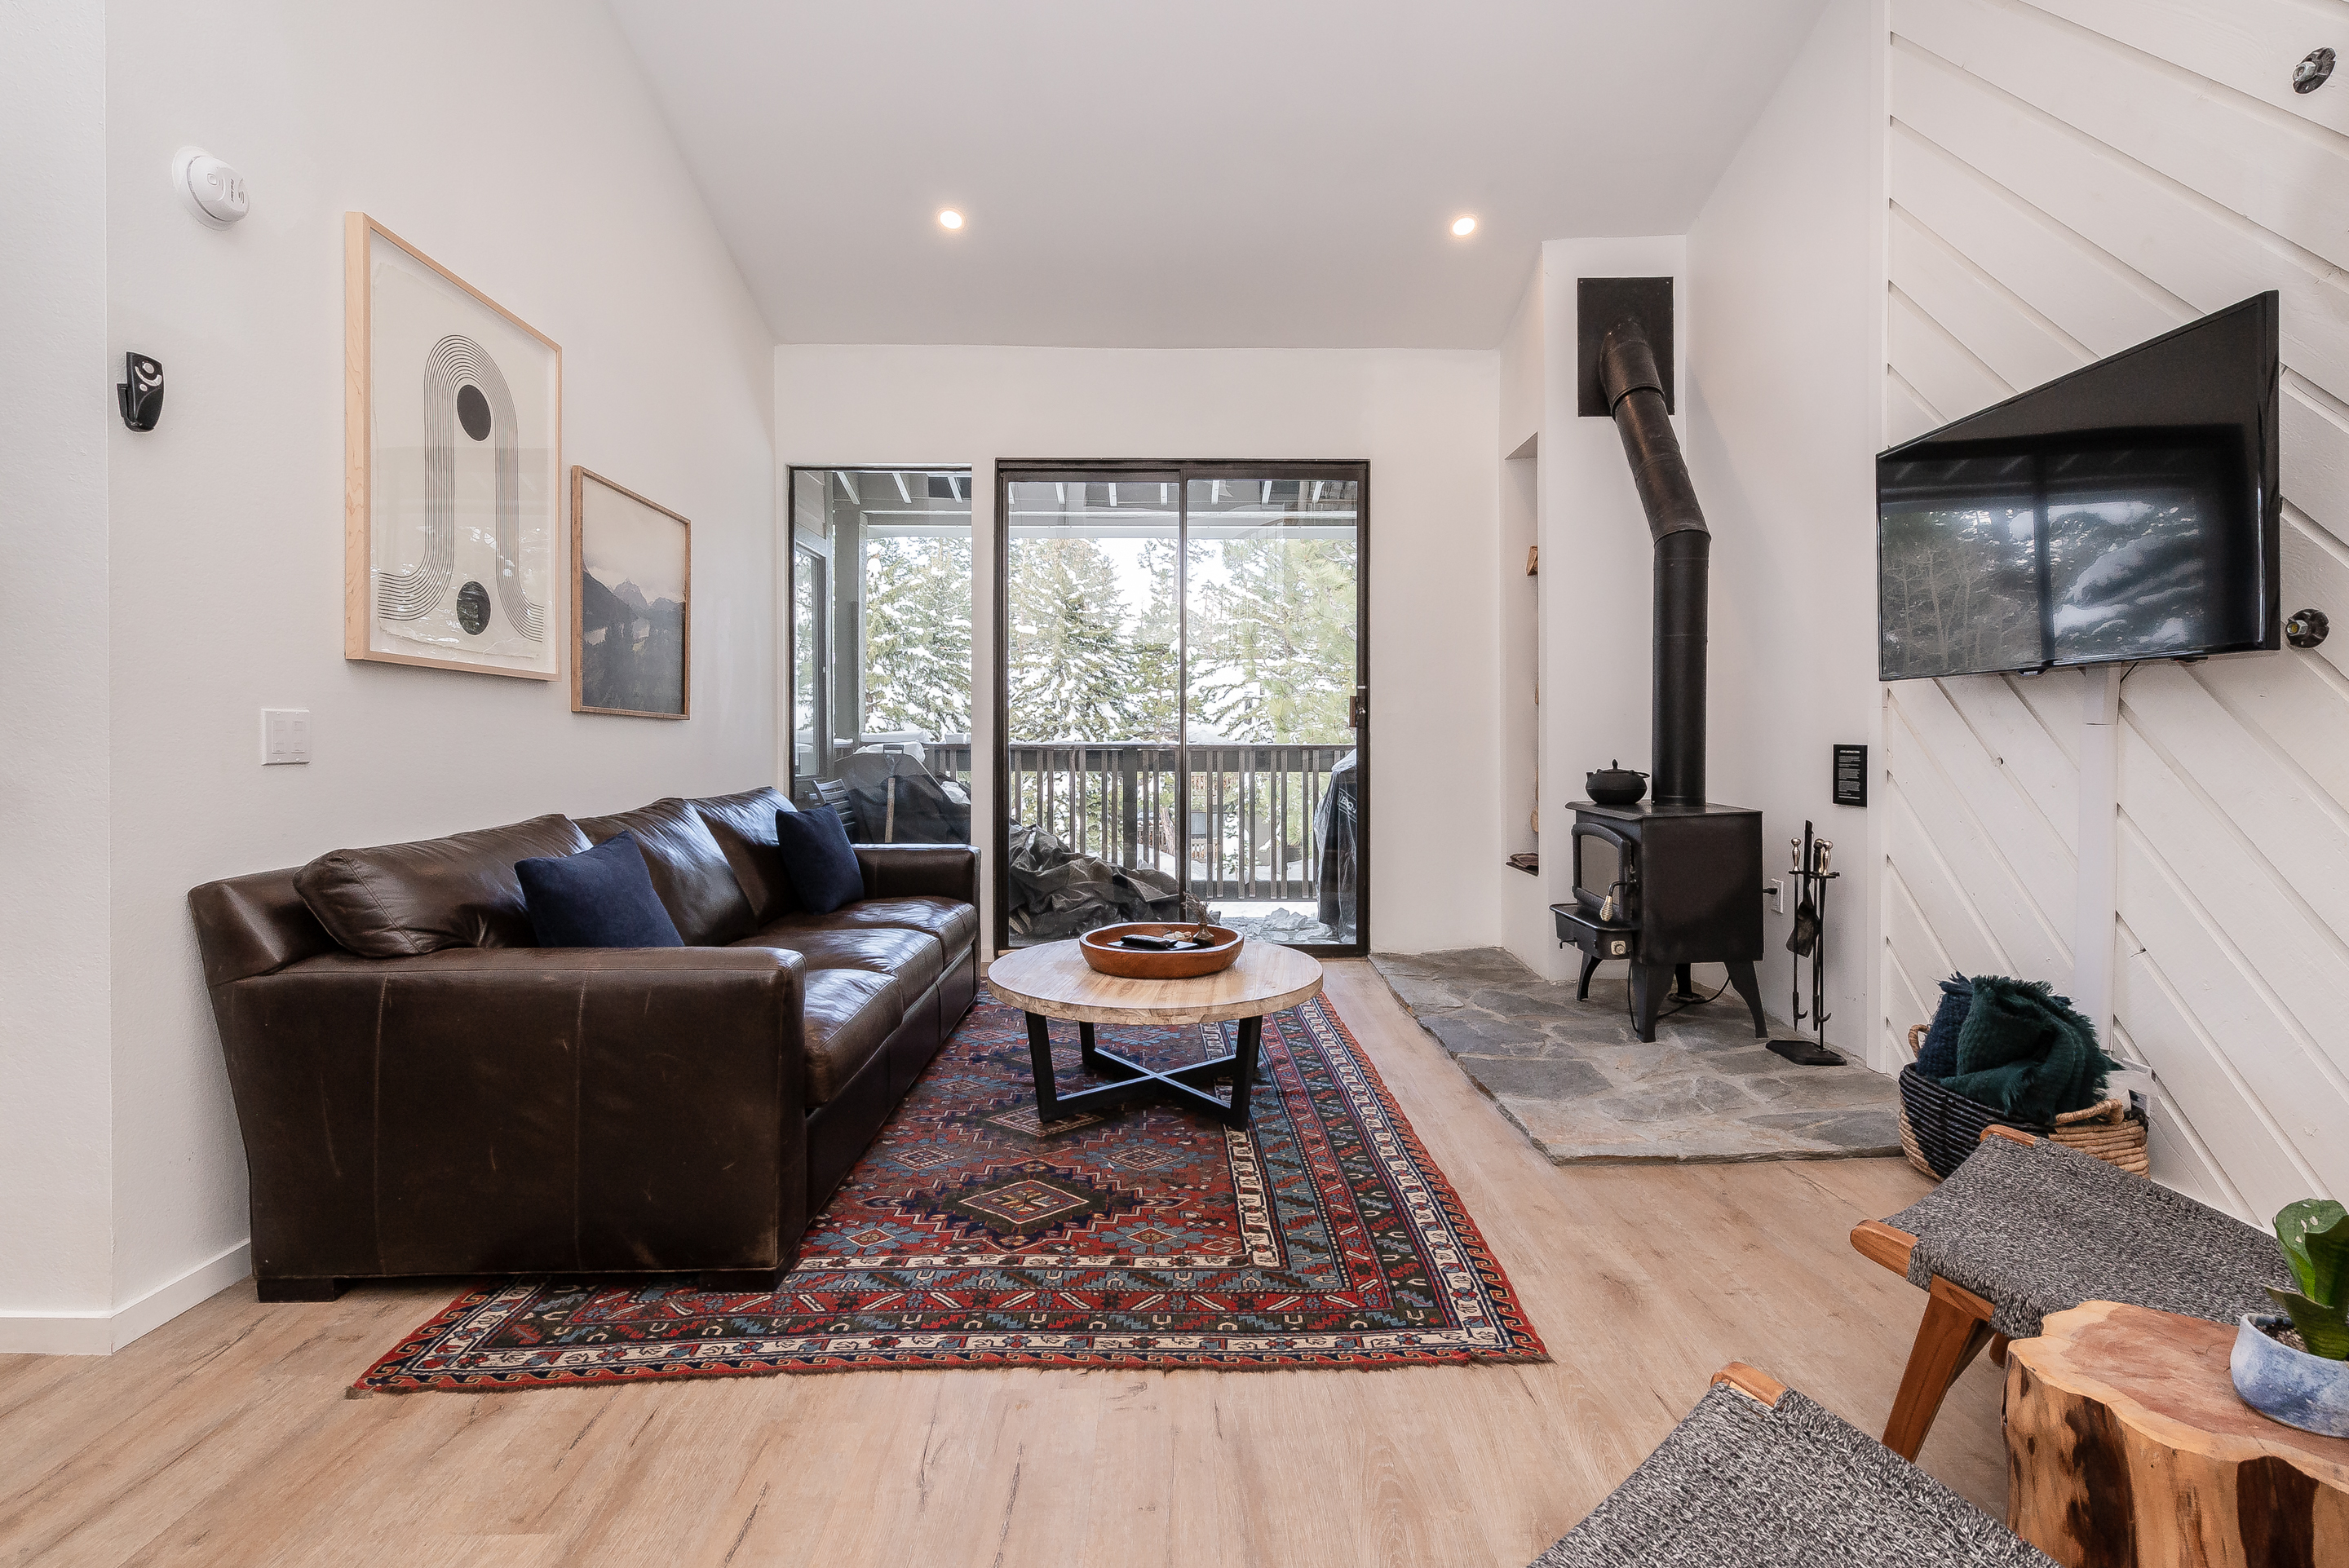 Living Room, Queen Sleeper Sofa, Two Chairs, Wood Burning Stove, Deck, Flat Screen TV, Hardwood Floors